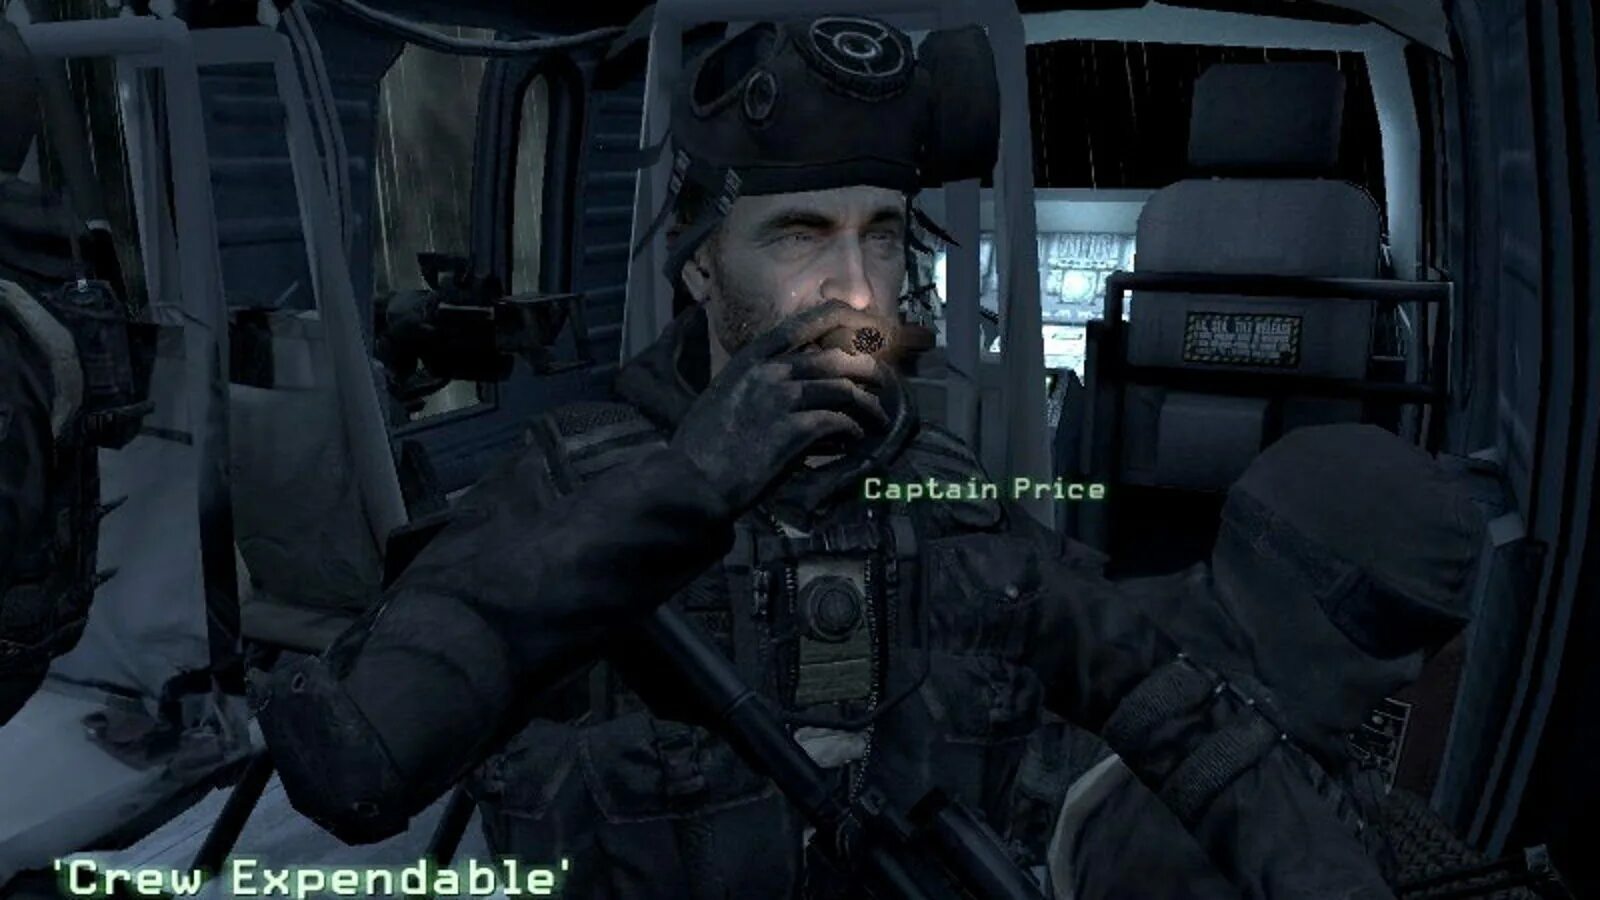 Фразы из call of duty. Капитан прайс из Call of Duty Modern Warfare 2. Call of Duty Капитан. Цитаты из Call of Duty. Call of Duty Капитан прайс.